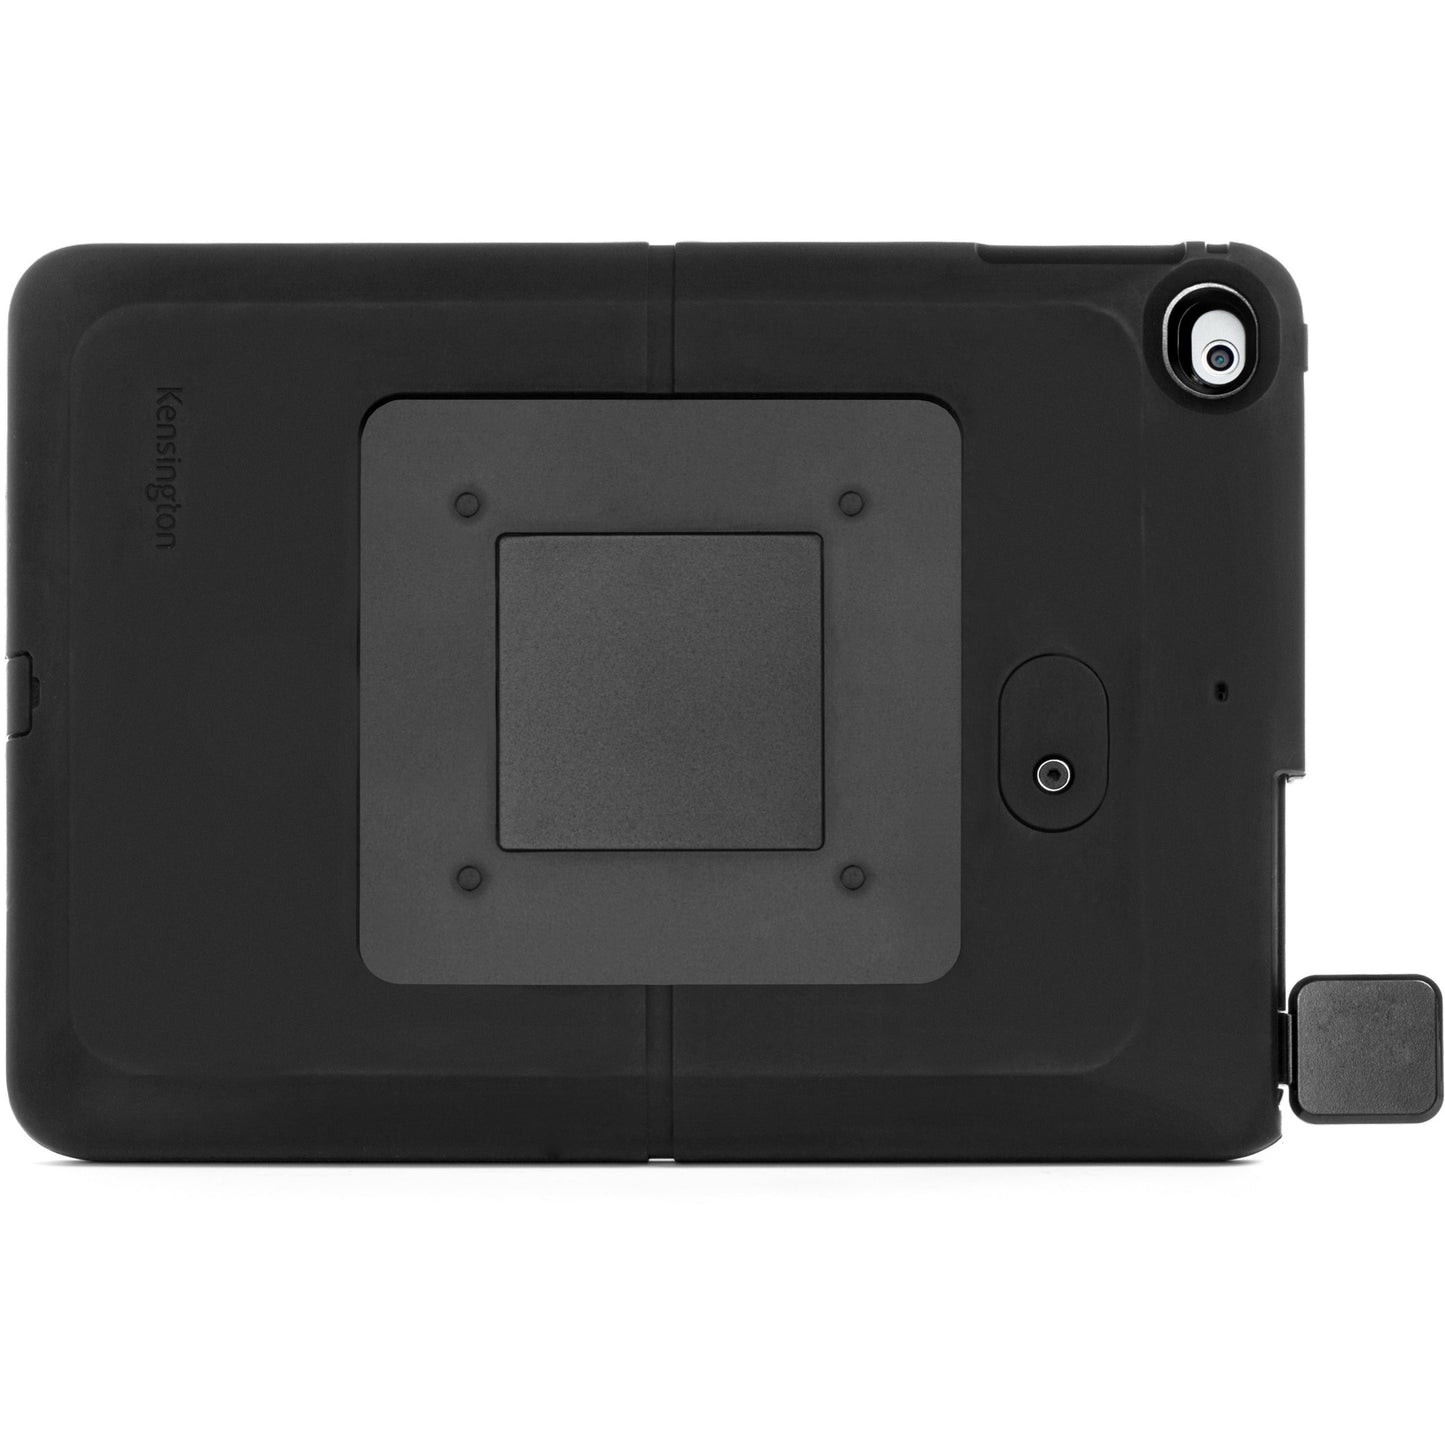 Kensington SecureBack K97907WW Carrying Case Apple iPad Air iPad Air 2 Tablet - Black